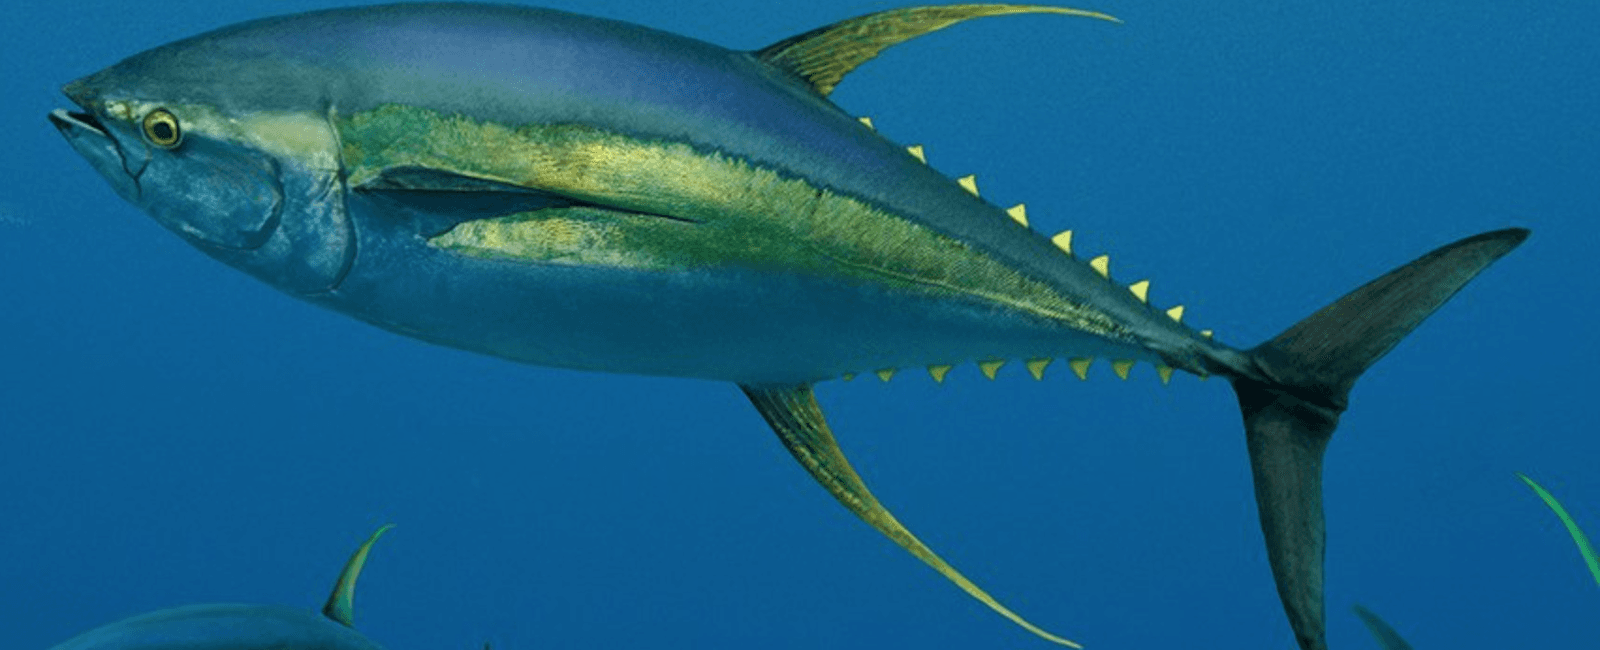 What is the hawaiian name for yellow fin tuna ahi